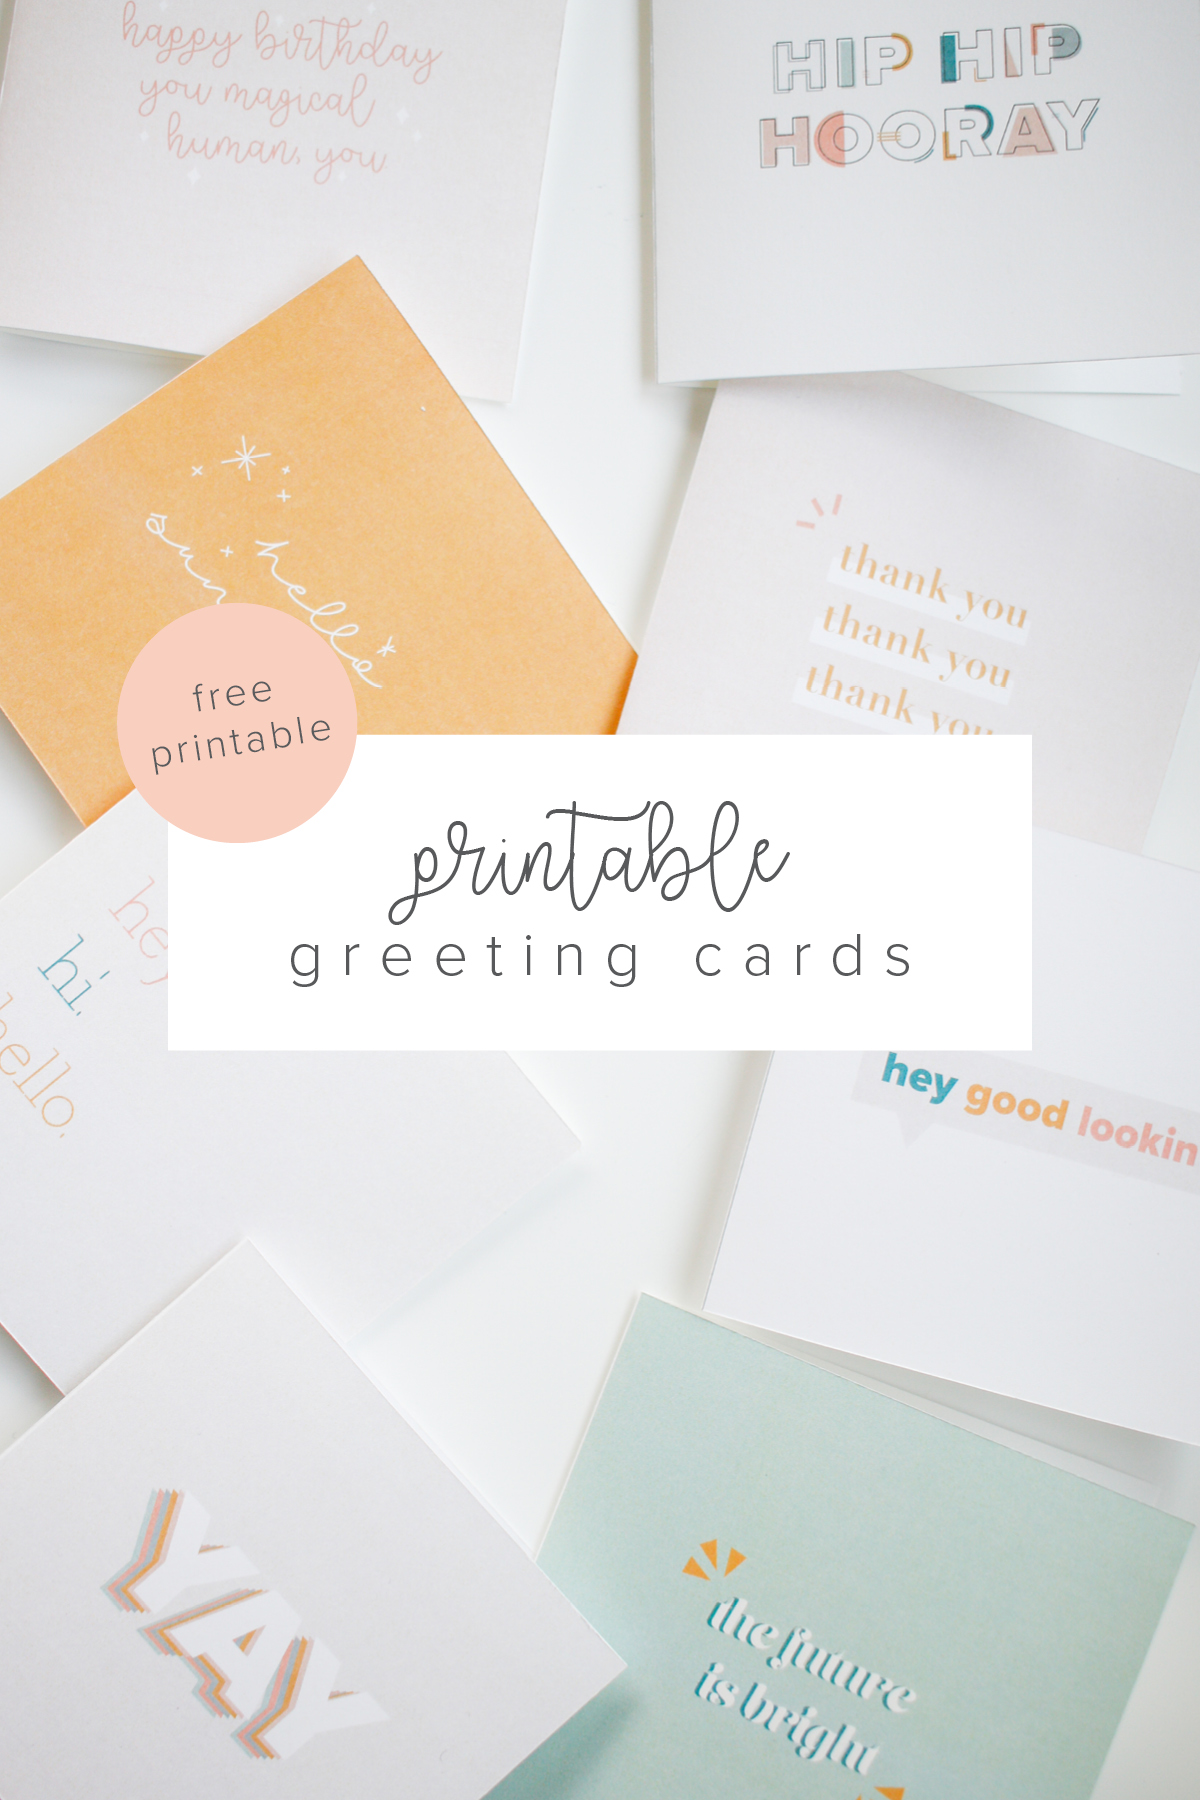 free printable greeting cards no downloads